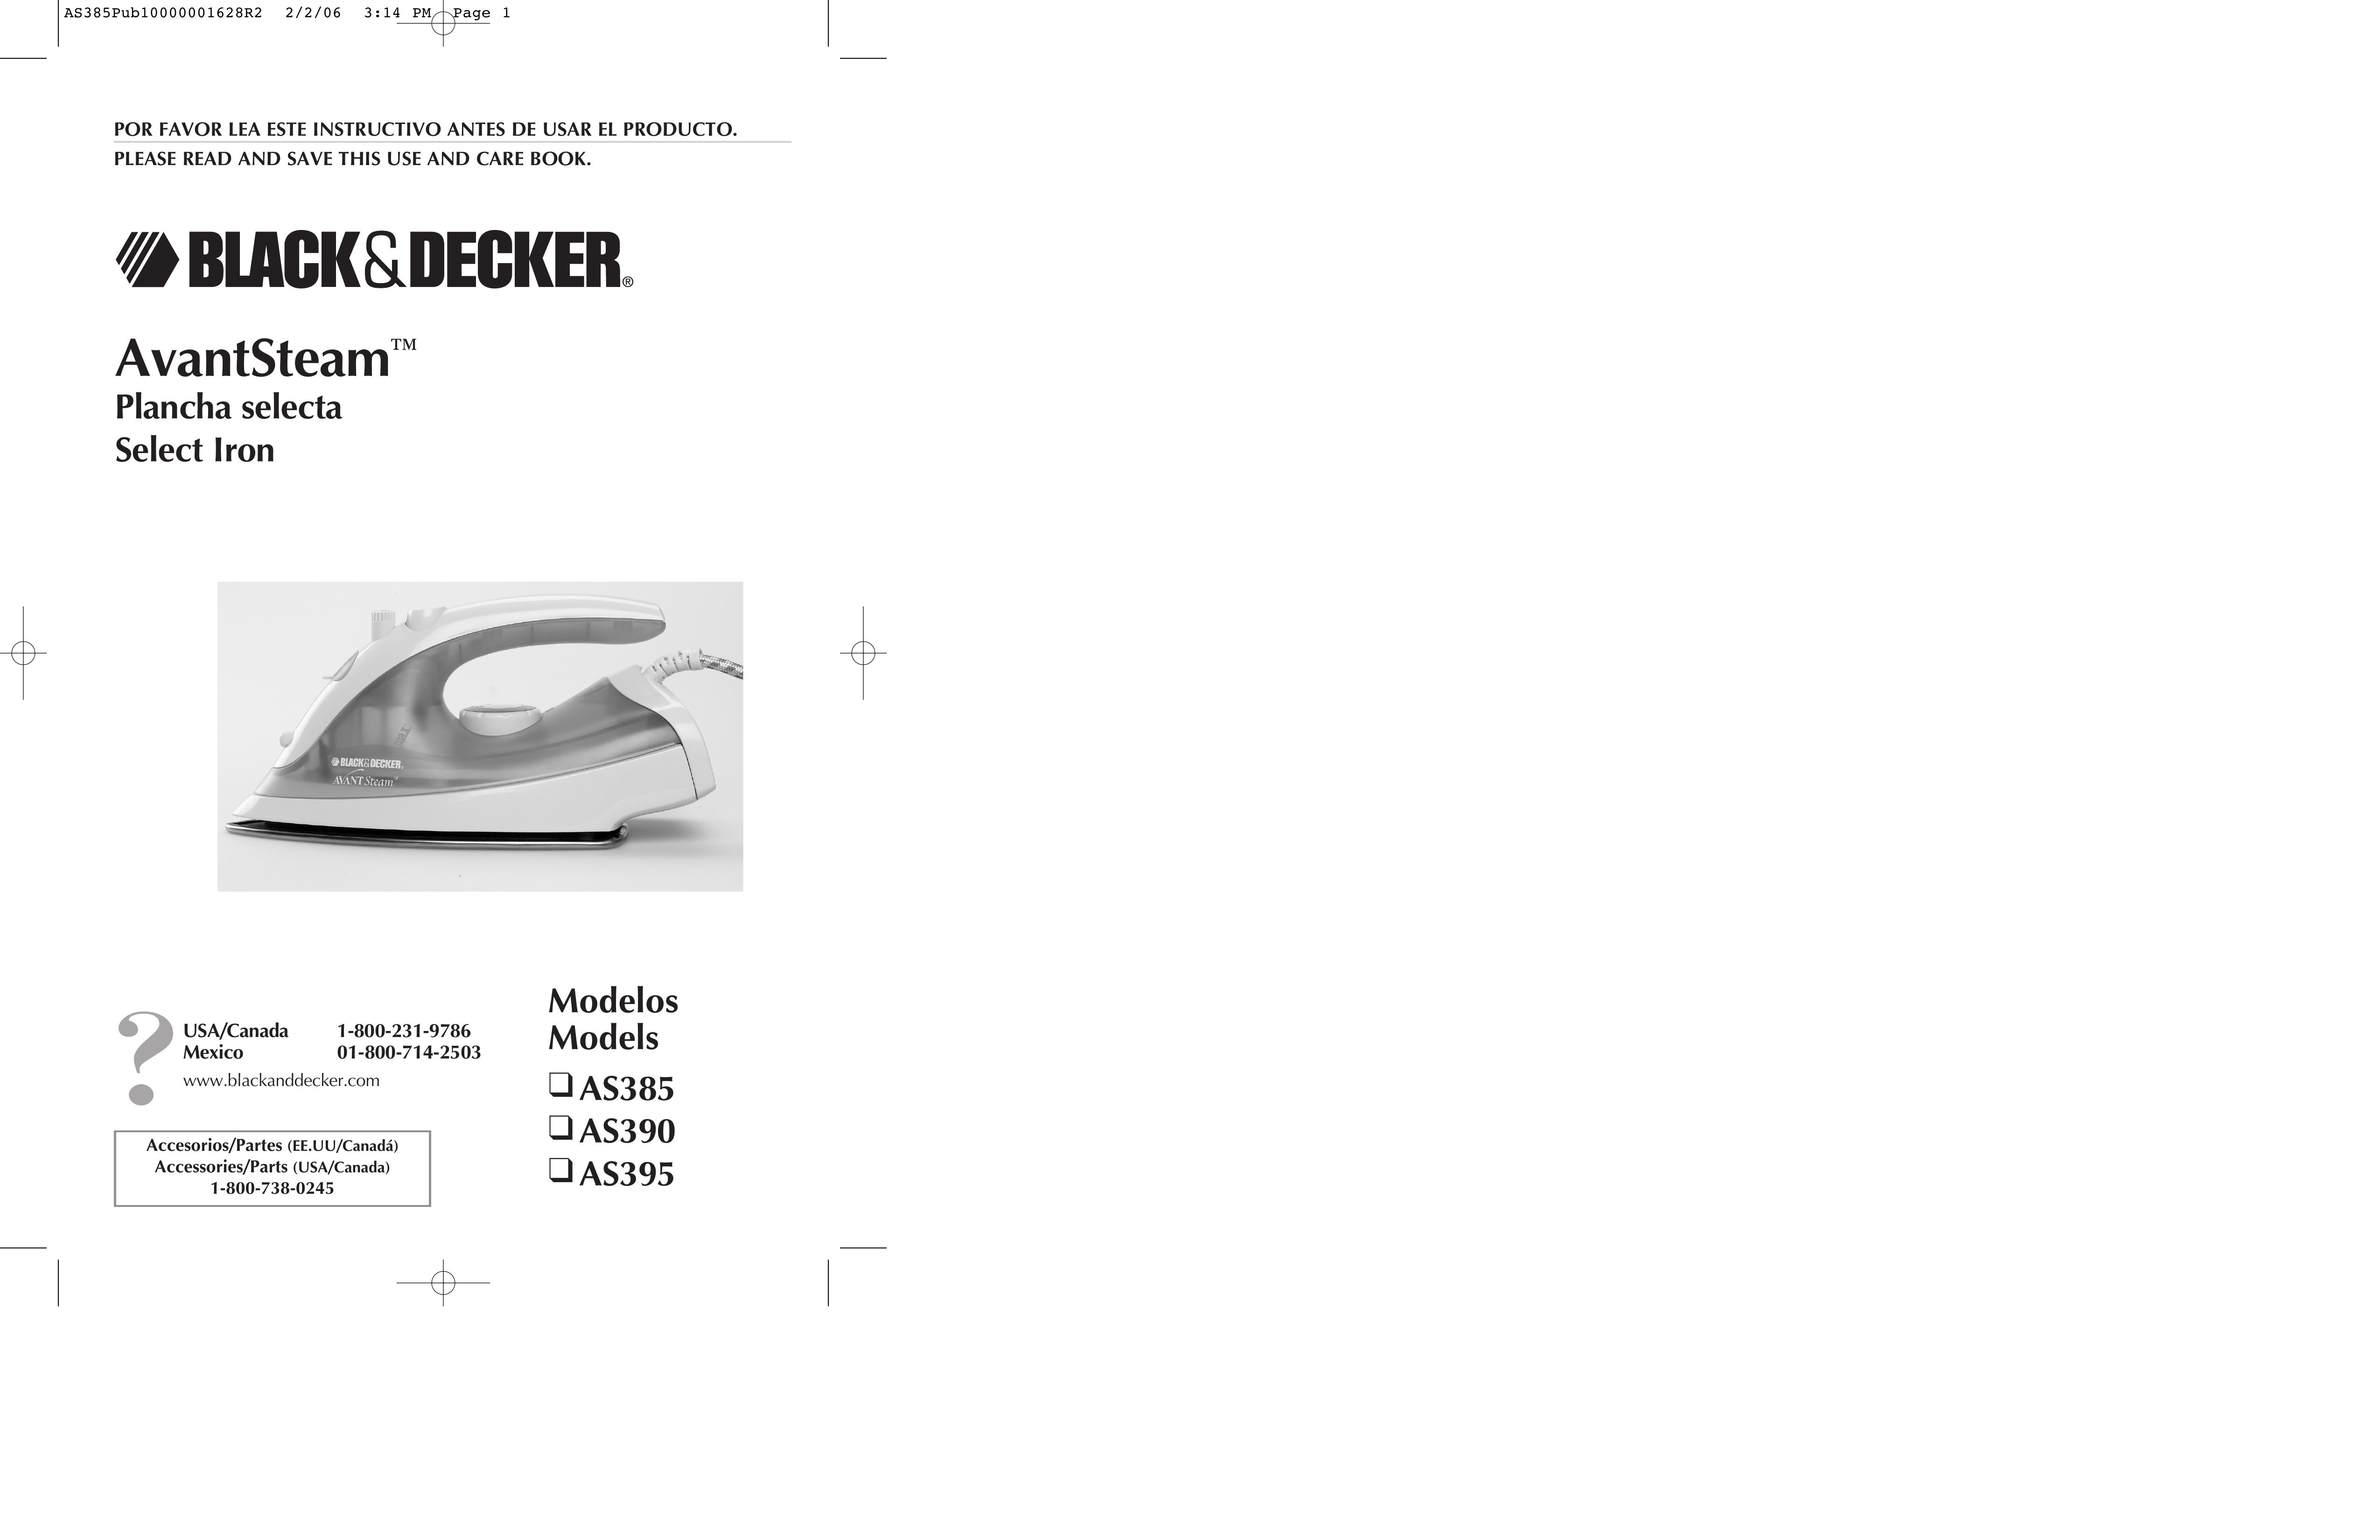 Black & Decker AS395 Iron User Manual